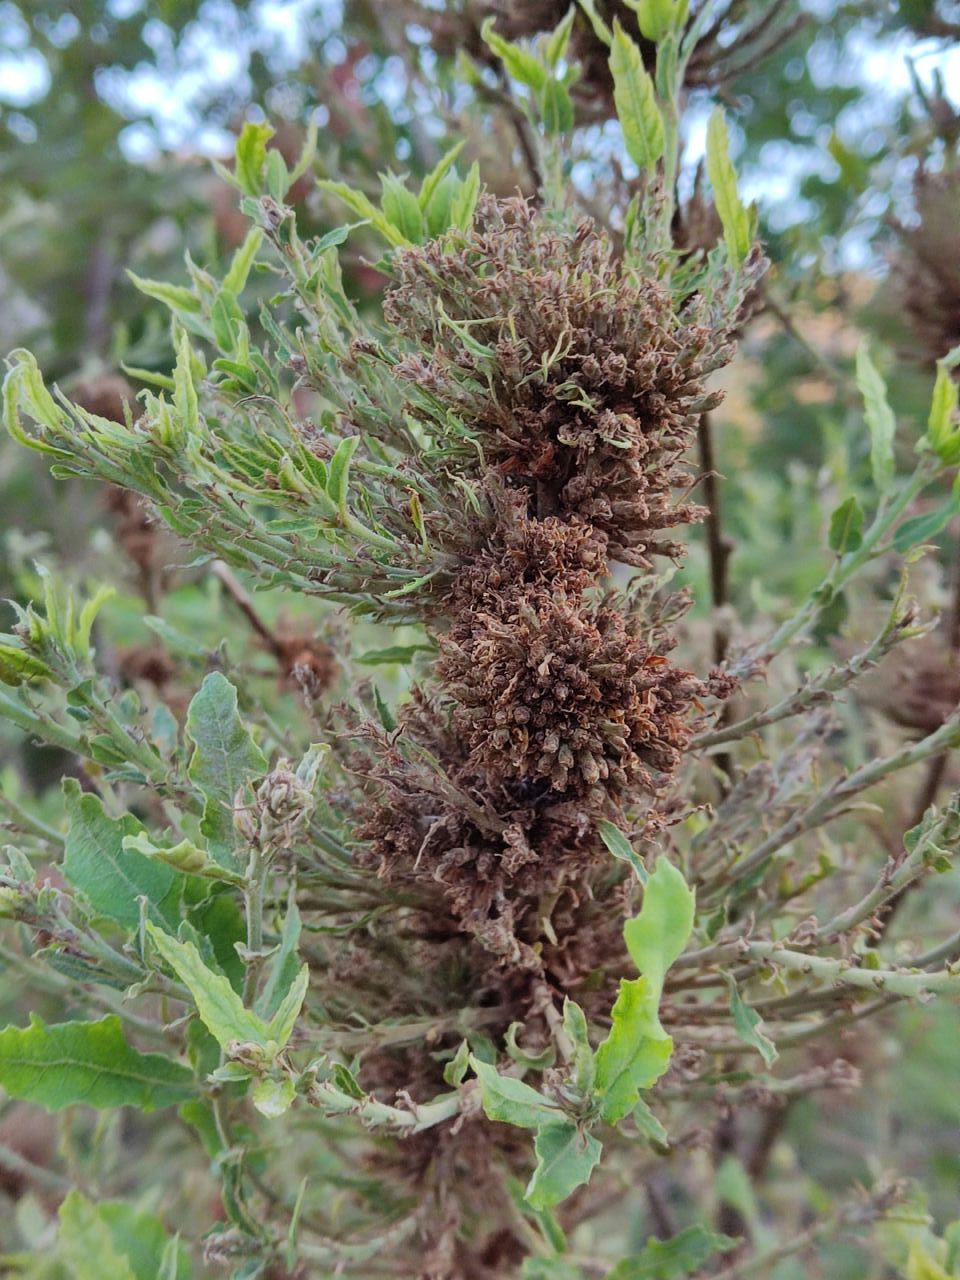 Eriophyidae? On Quercus